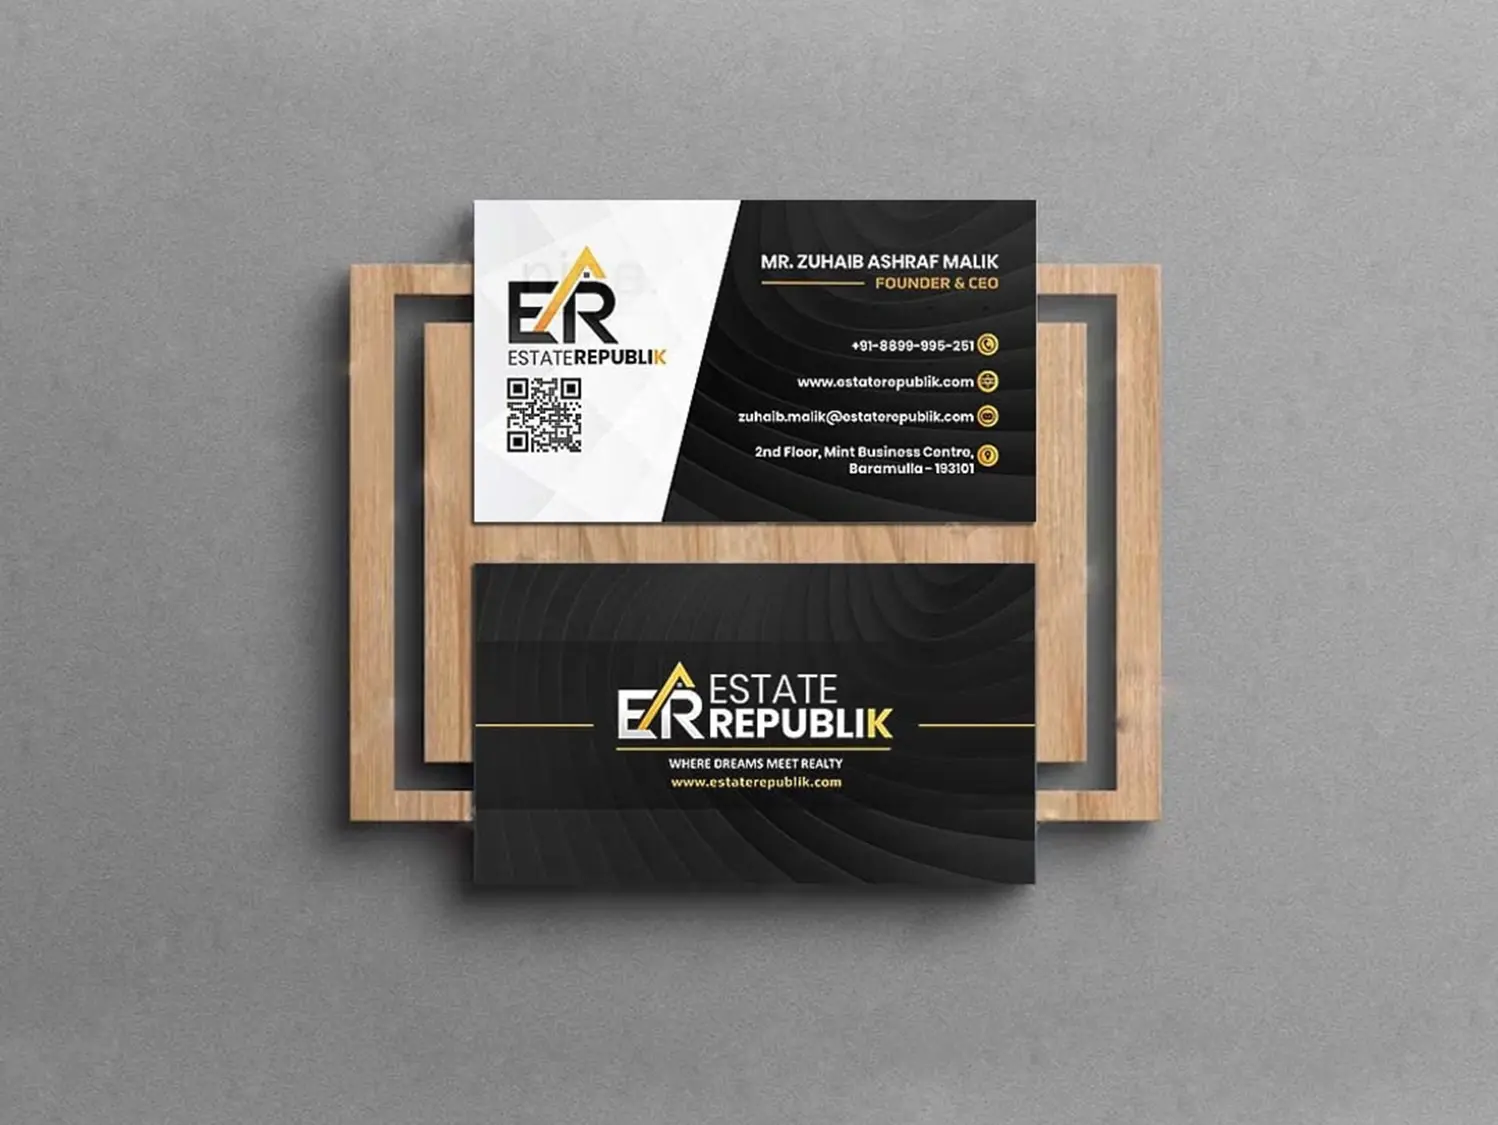 EstateRepublik Business Card Mockup-By Acmo Network (2)